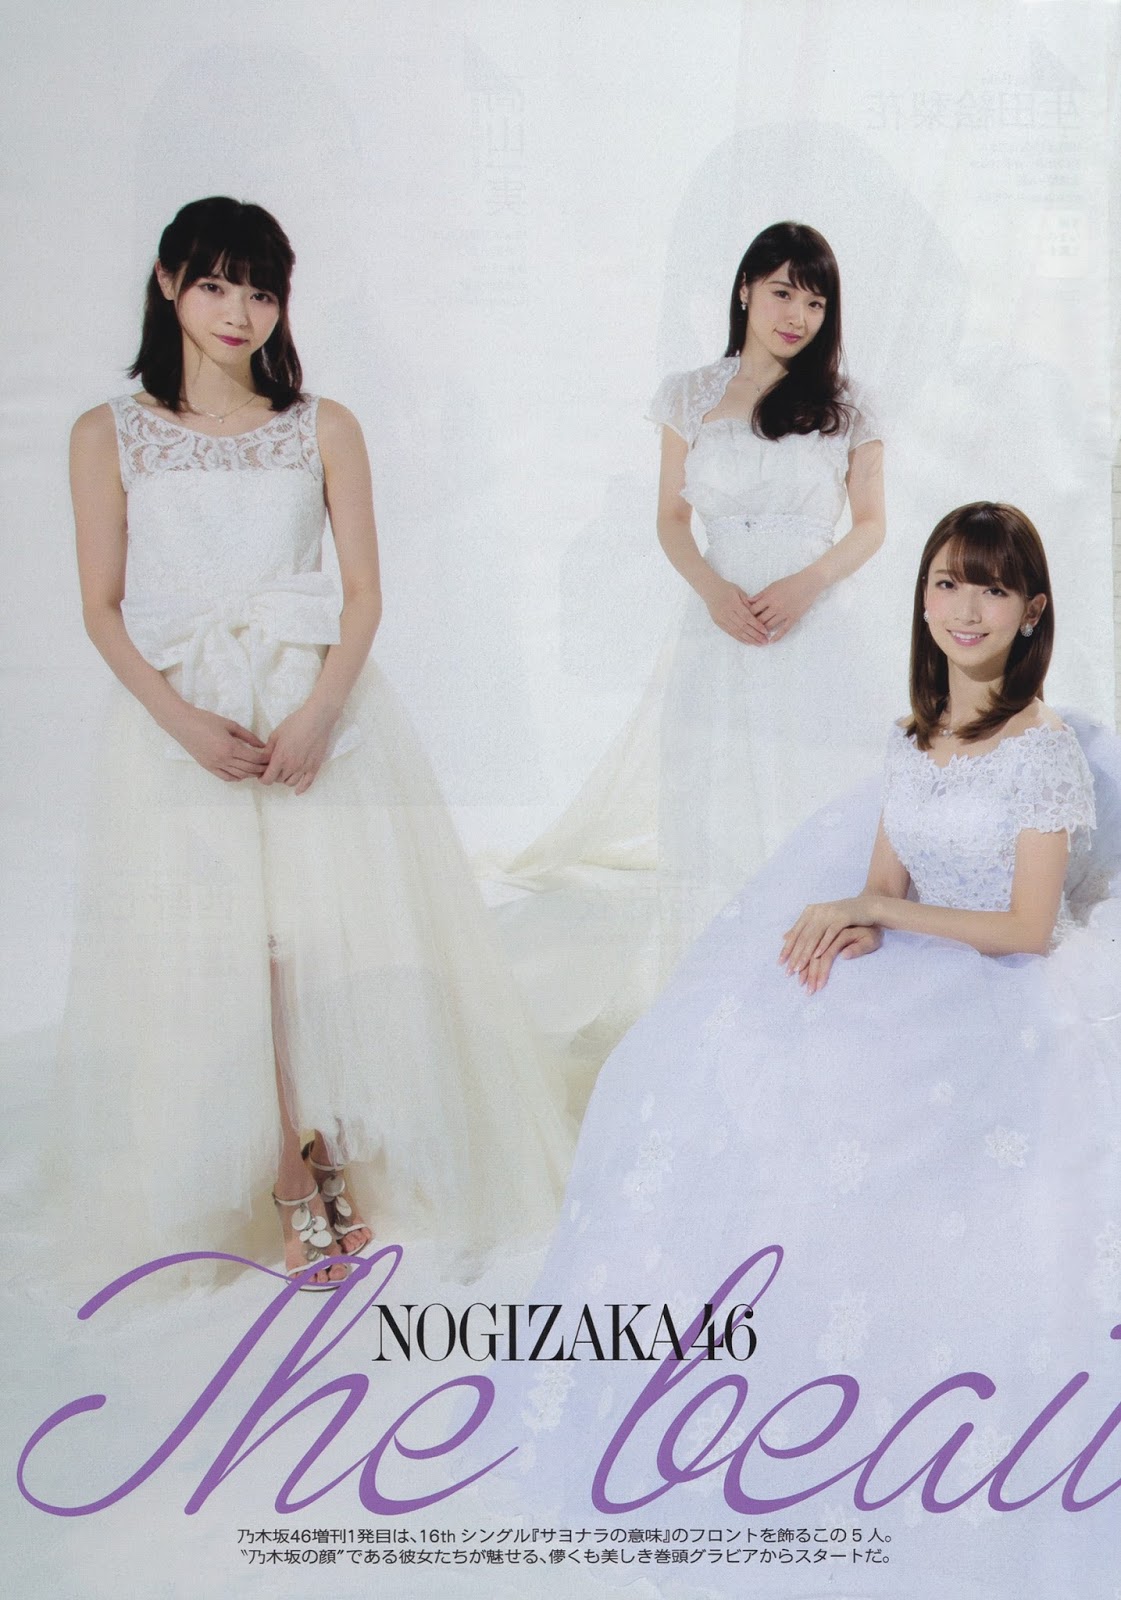 Nao Kanzaki and a few friends: Nogizaka46: 2016 Magazine scans #76 